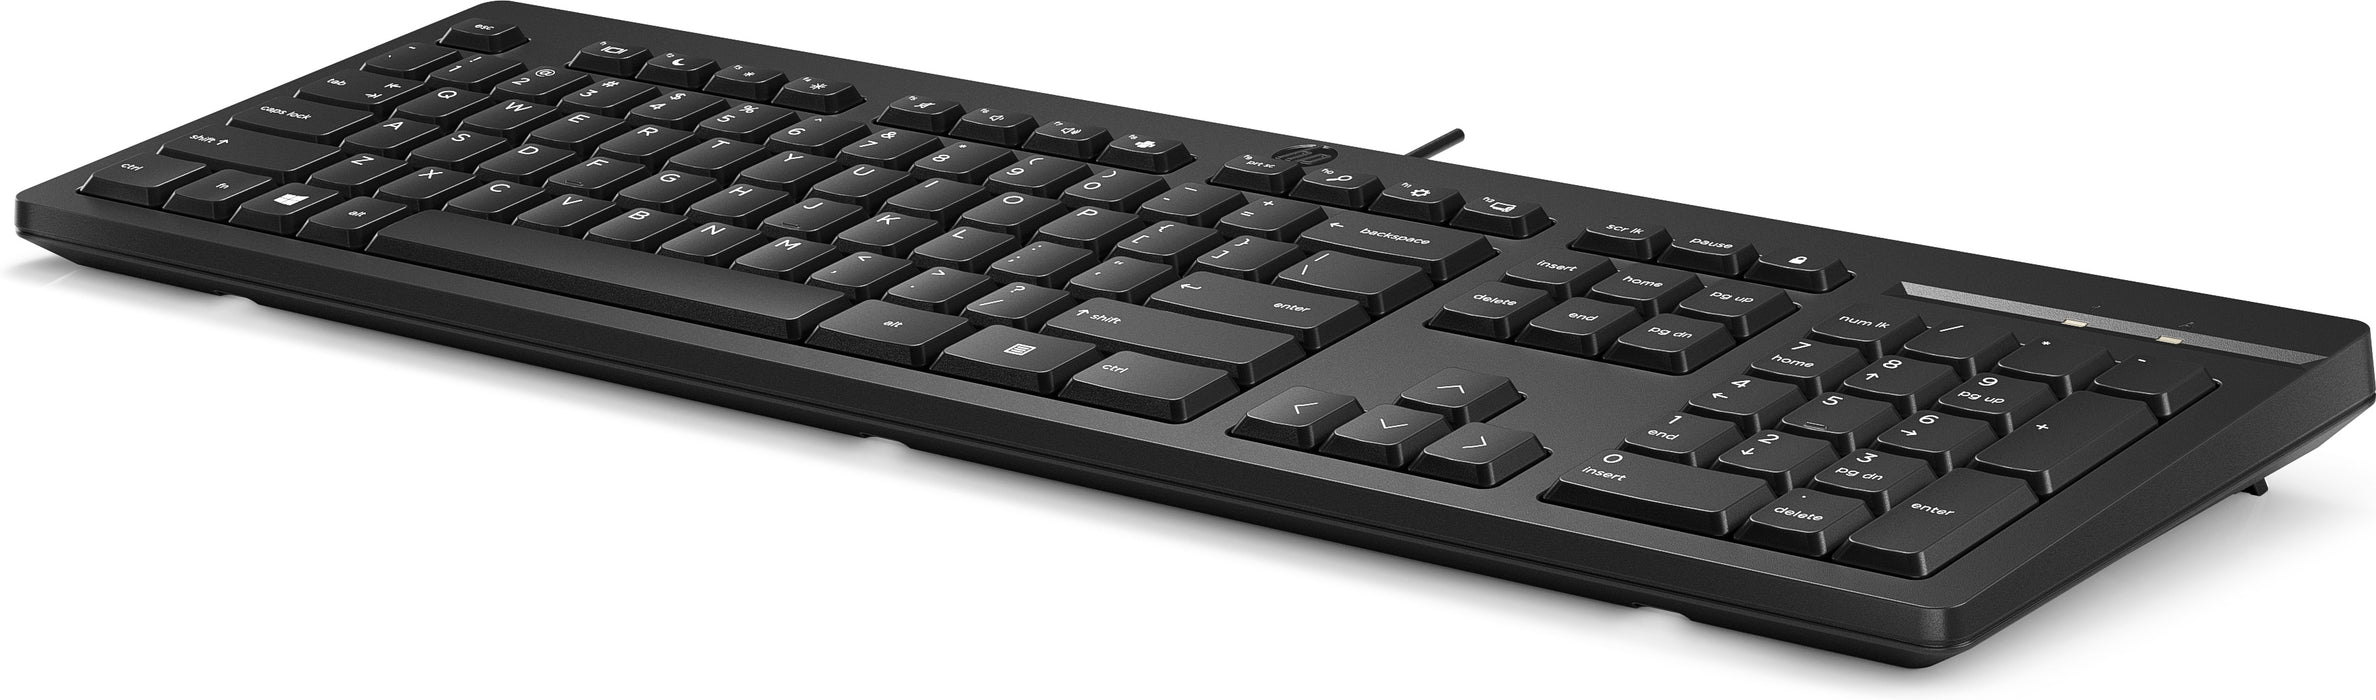 HP 125 Wired Keyboard, Full-size (100%), USB, Membrane, Black